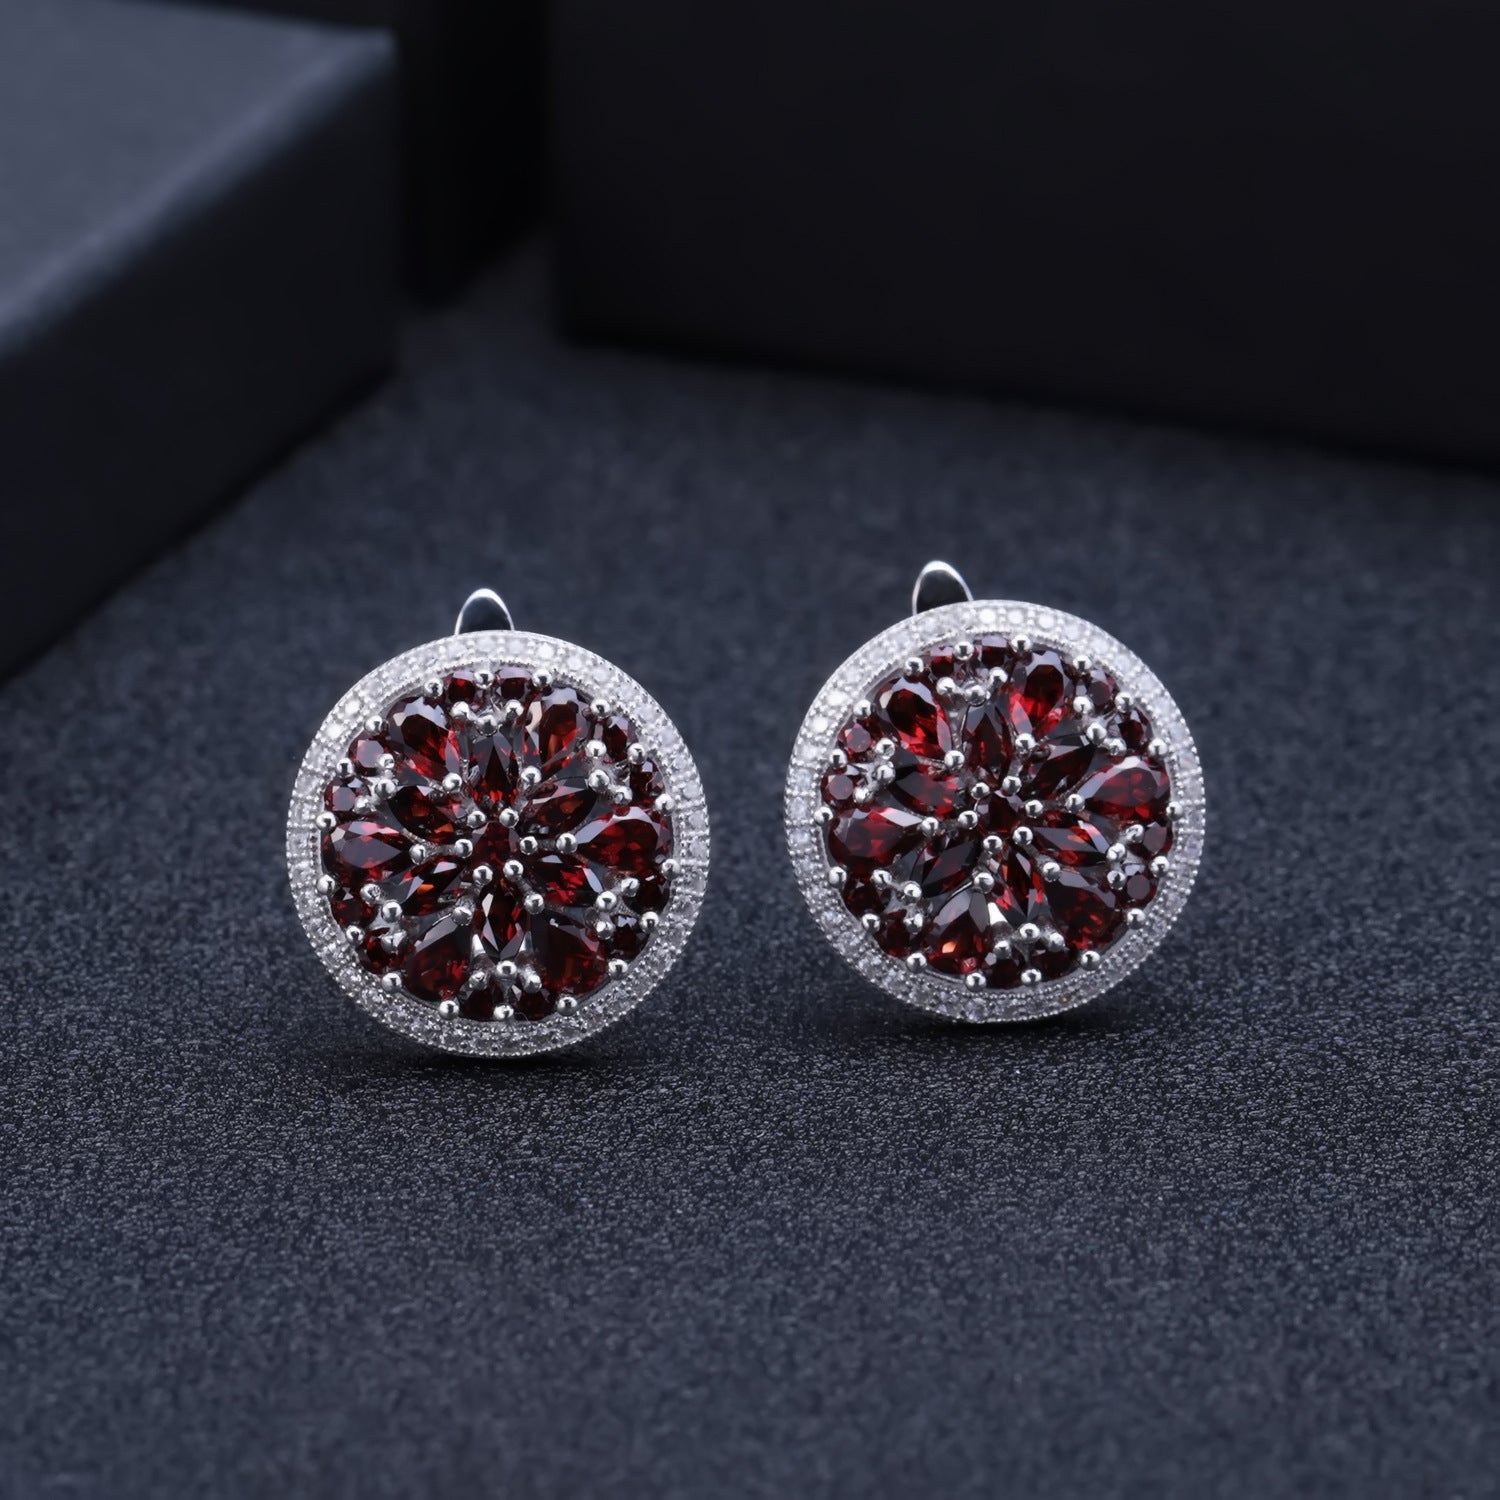 European Natural Gemstones Soleste Halo Circle Silver Studs Earrings for Women